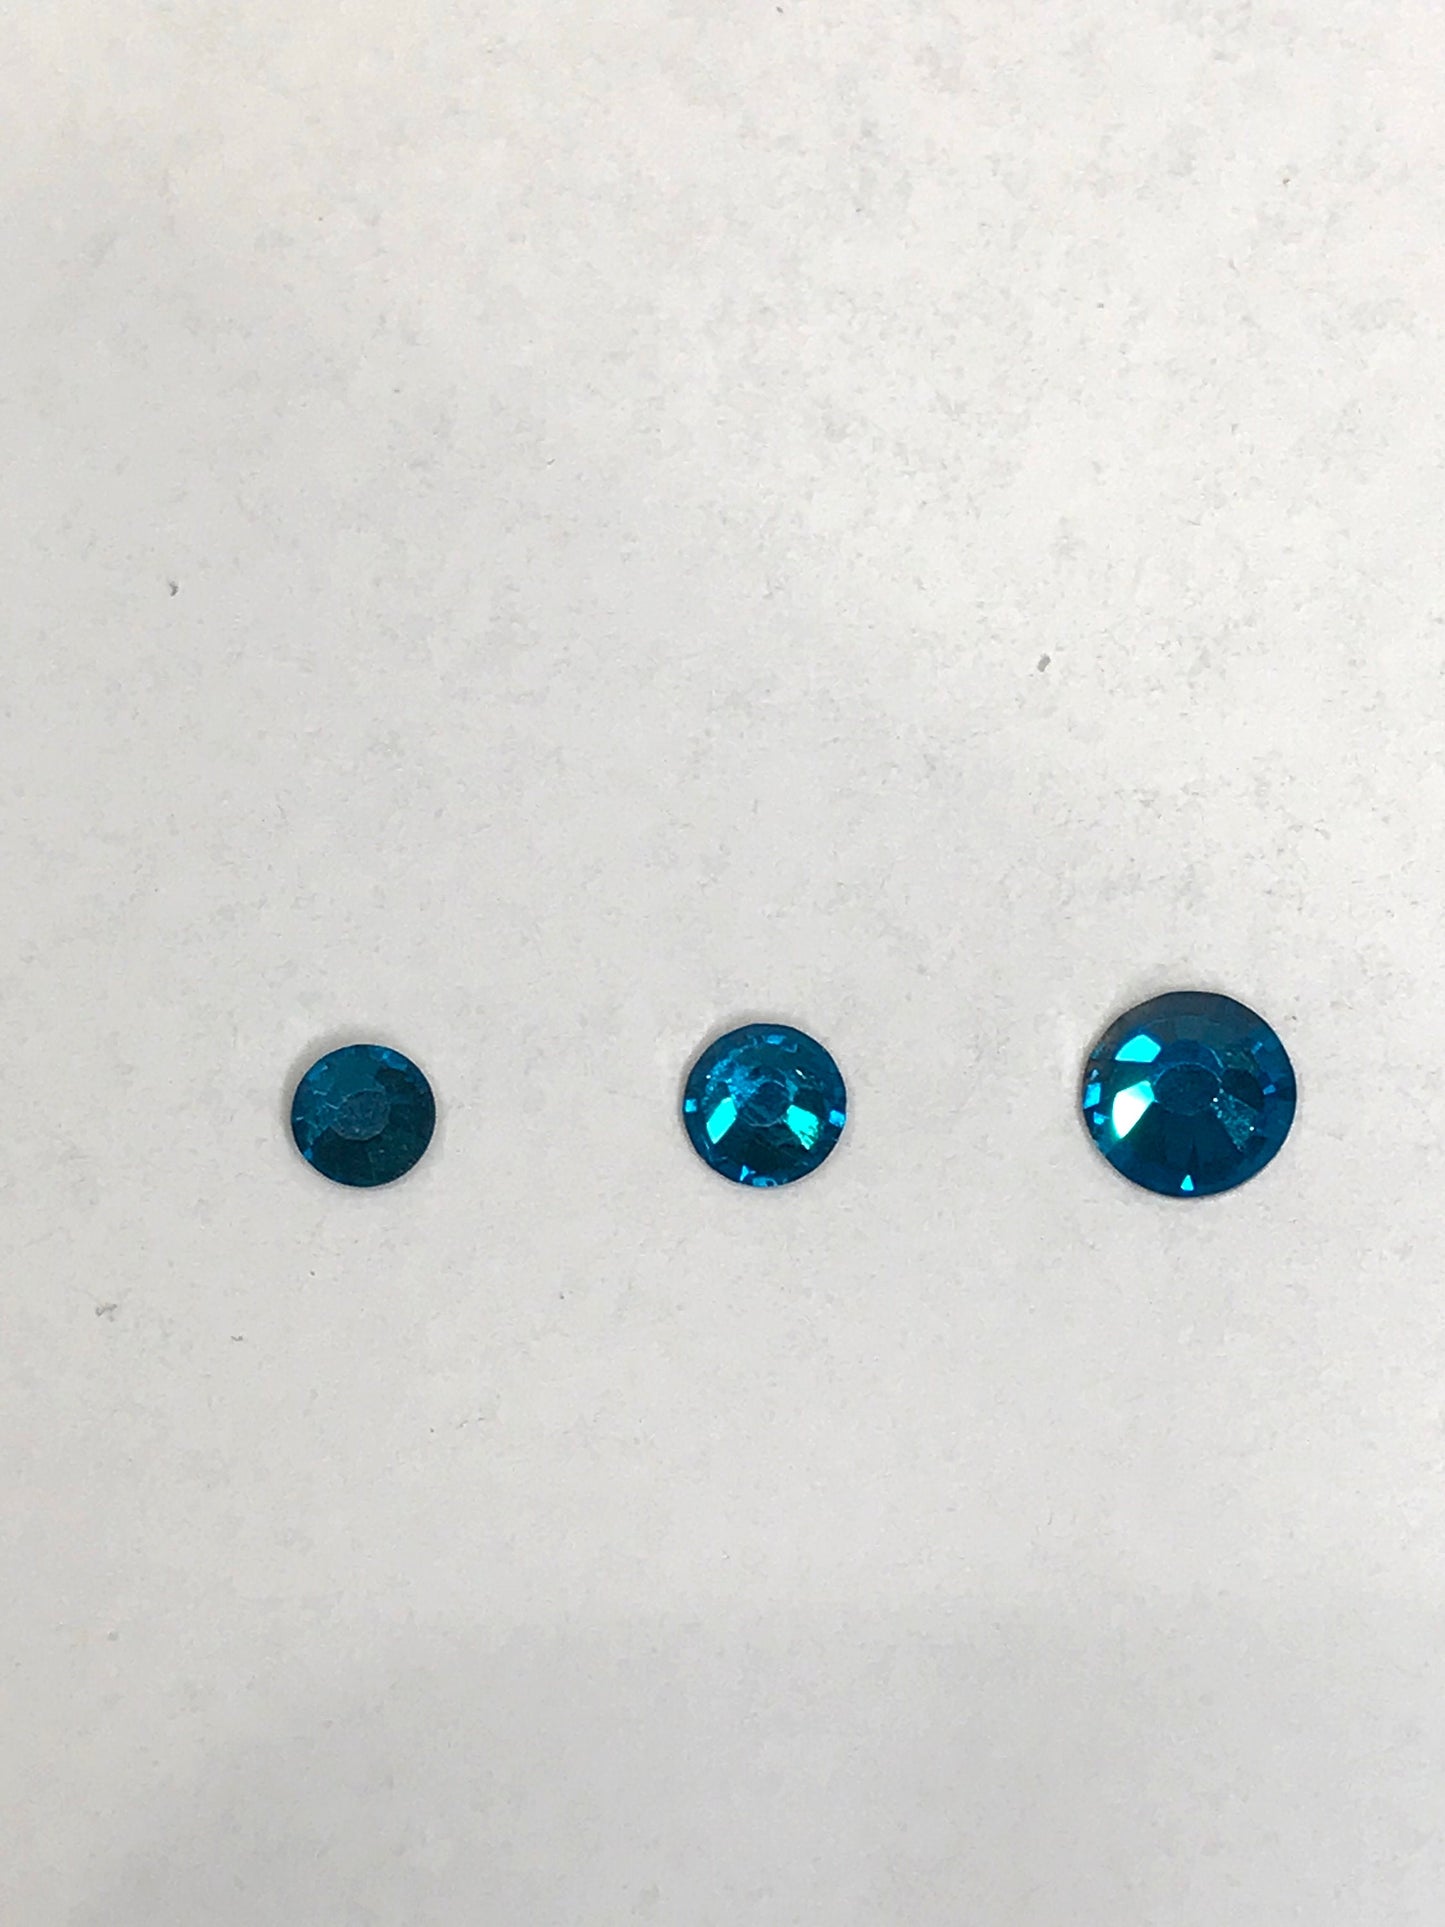 Peacock Blue Crystal Glass Flat Back Rhinestones - 1,440 pcs per bag